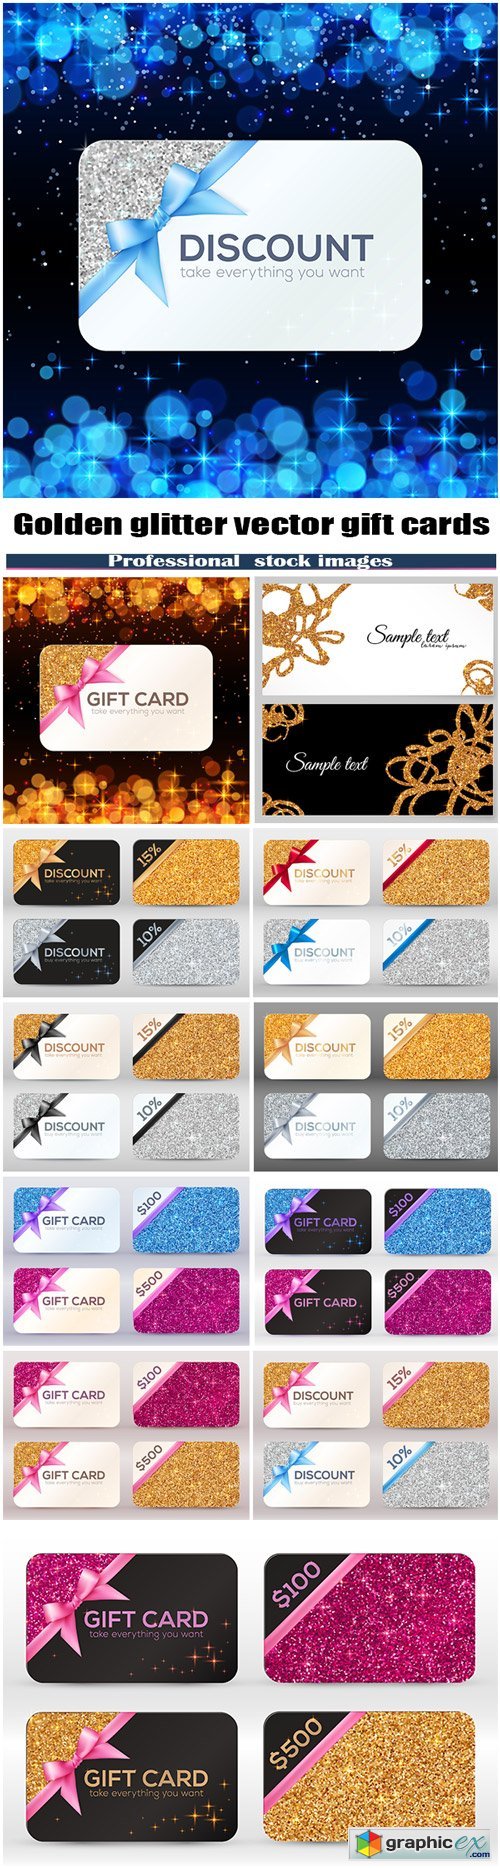 Set of golden glitter vector gift cards templates